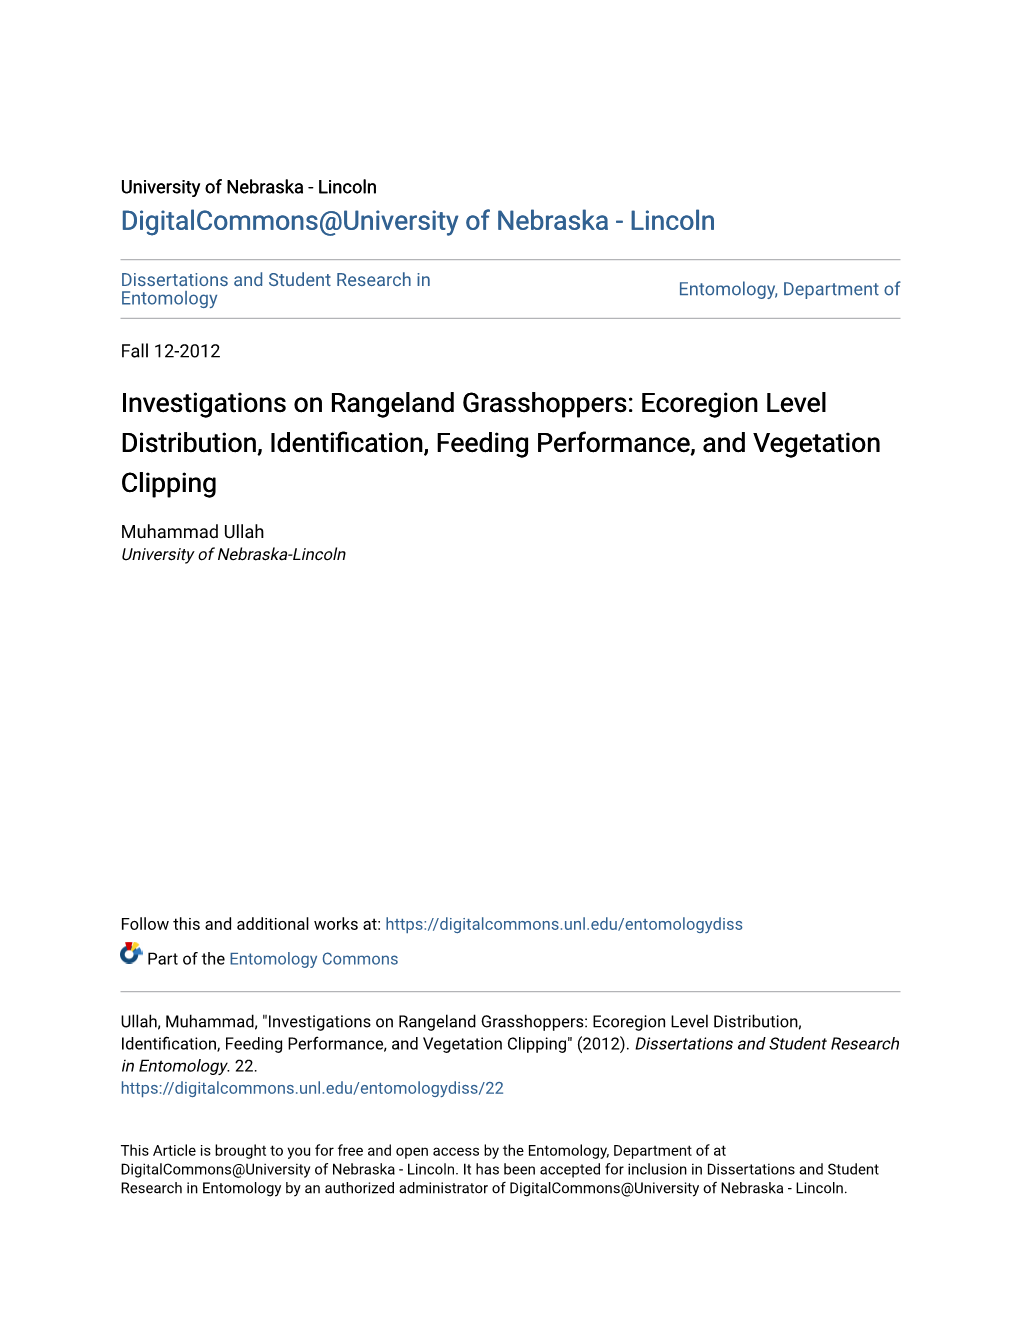 Investigations on Rangeland Grasshoppers: Ecoregion Level Distribution, Identification, Eedingf Performance, and Vegetation Clipping